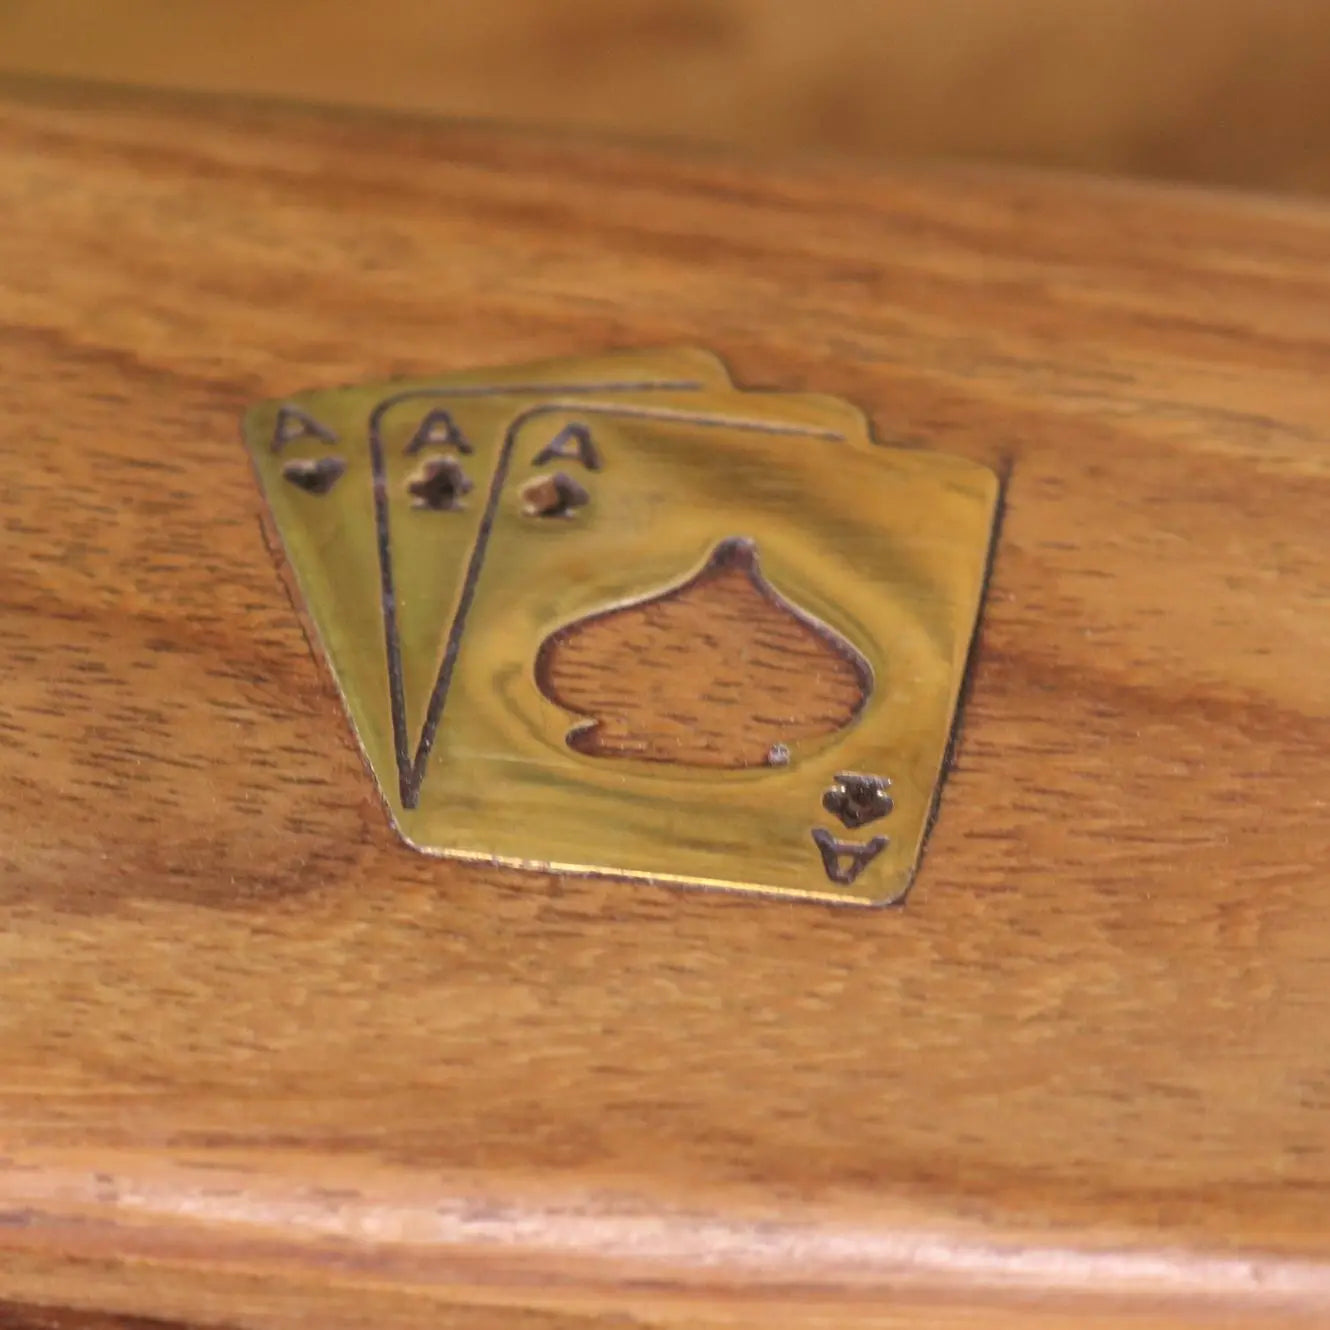 Boda Sheesham Wood Bridge Game Set - Closeup of Emblem